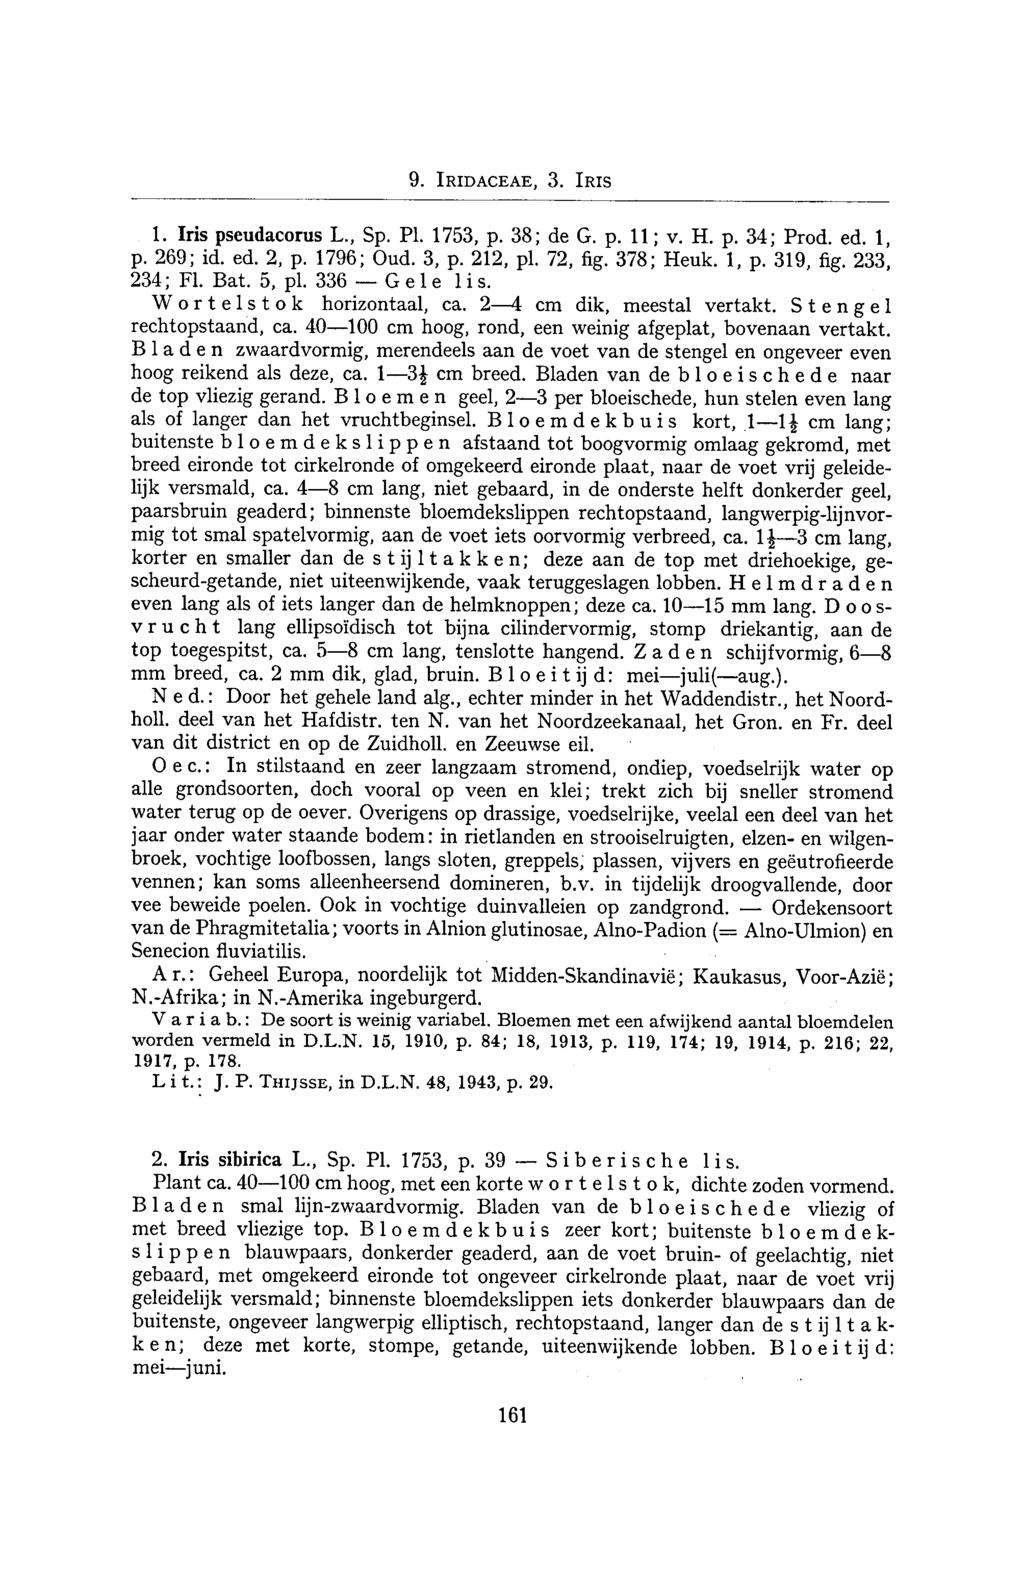 Gele Siberische 9. Iridaceae, 3. Iris 1. Iris pseudacorus L., Sp. PI. 1753, p. 38; de G. p. 11; v. H. p. 34; Prod. ed. 1, p. 269; id. ed. 2, p. 1796; Oud. 3, p. 212, pl. 72, fig. 378; Heuk.